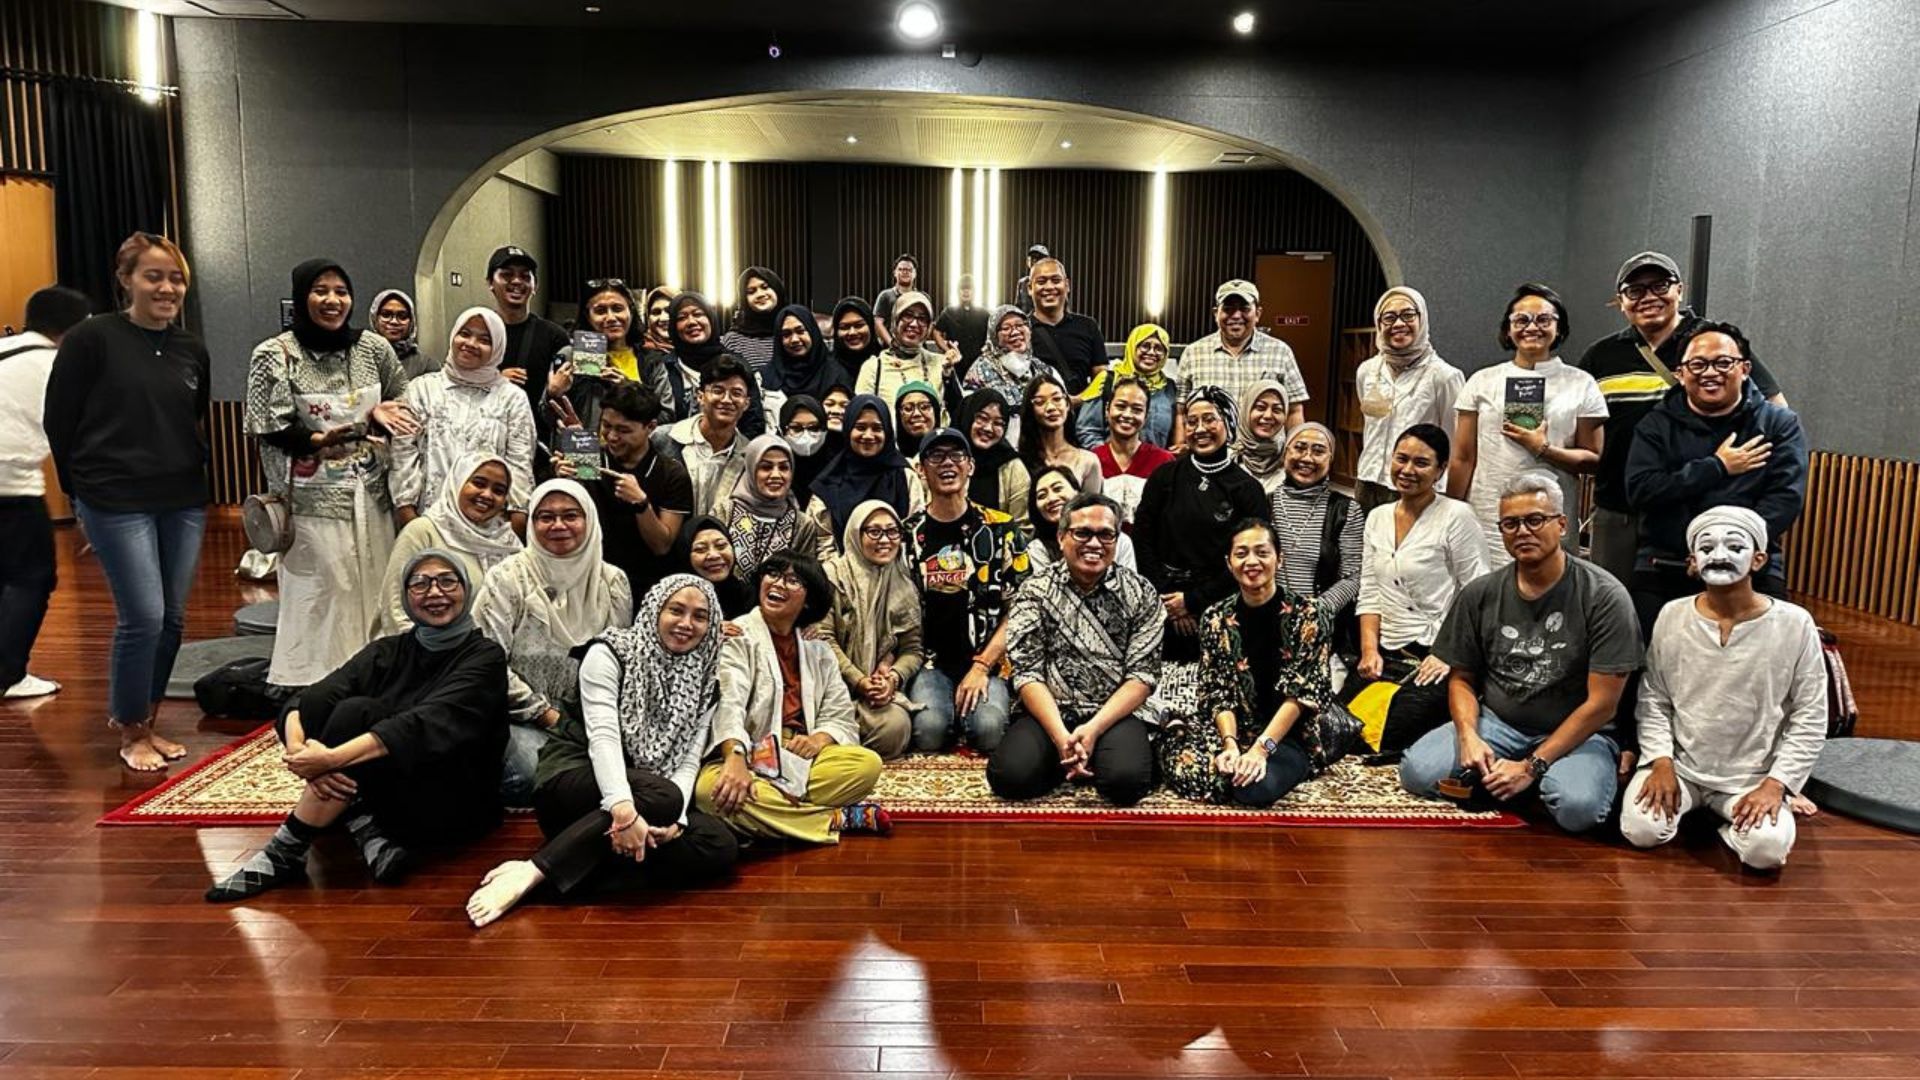 Berfoto bersama para fans serta rekan-rekan Panji Sakti pada acara Bincang Buku. / Foto Dok. Manajemen Panji Sakti